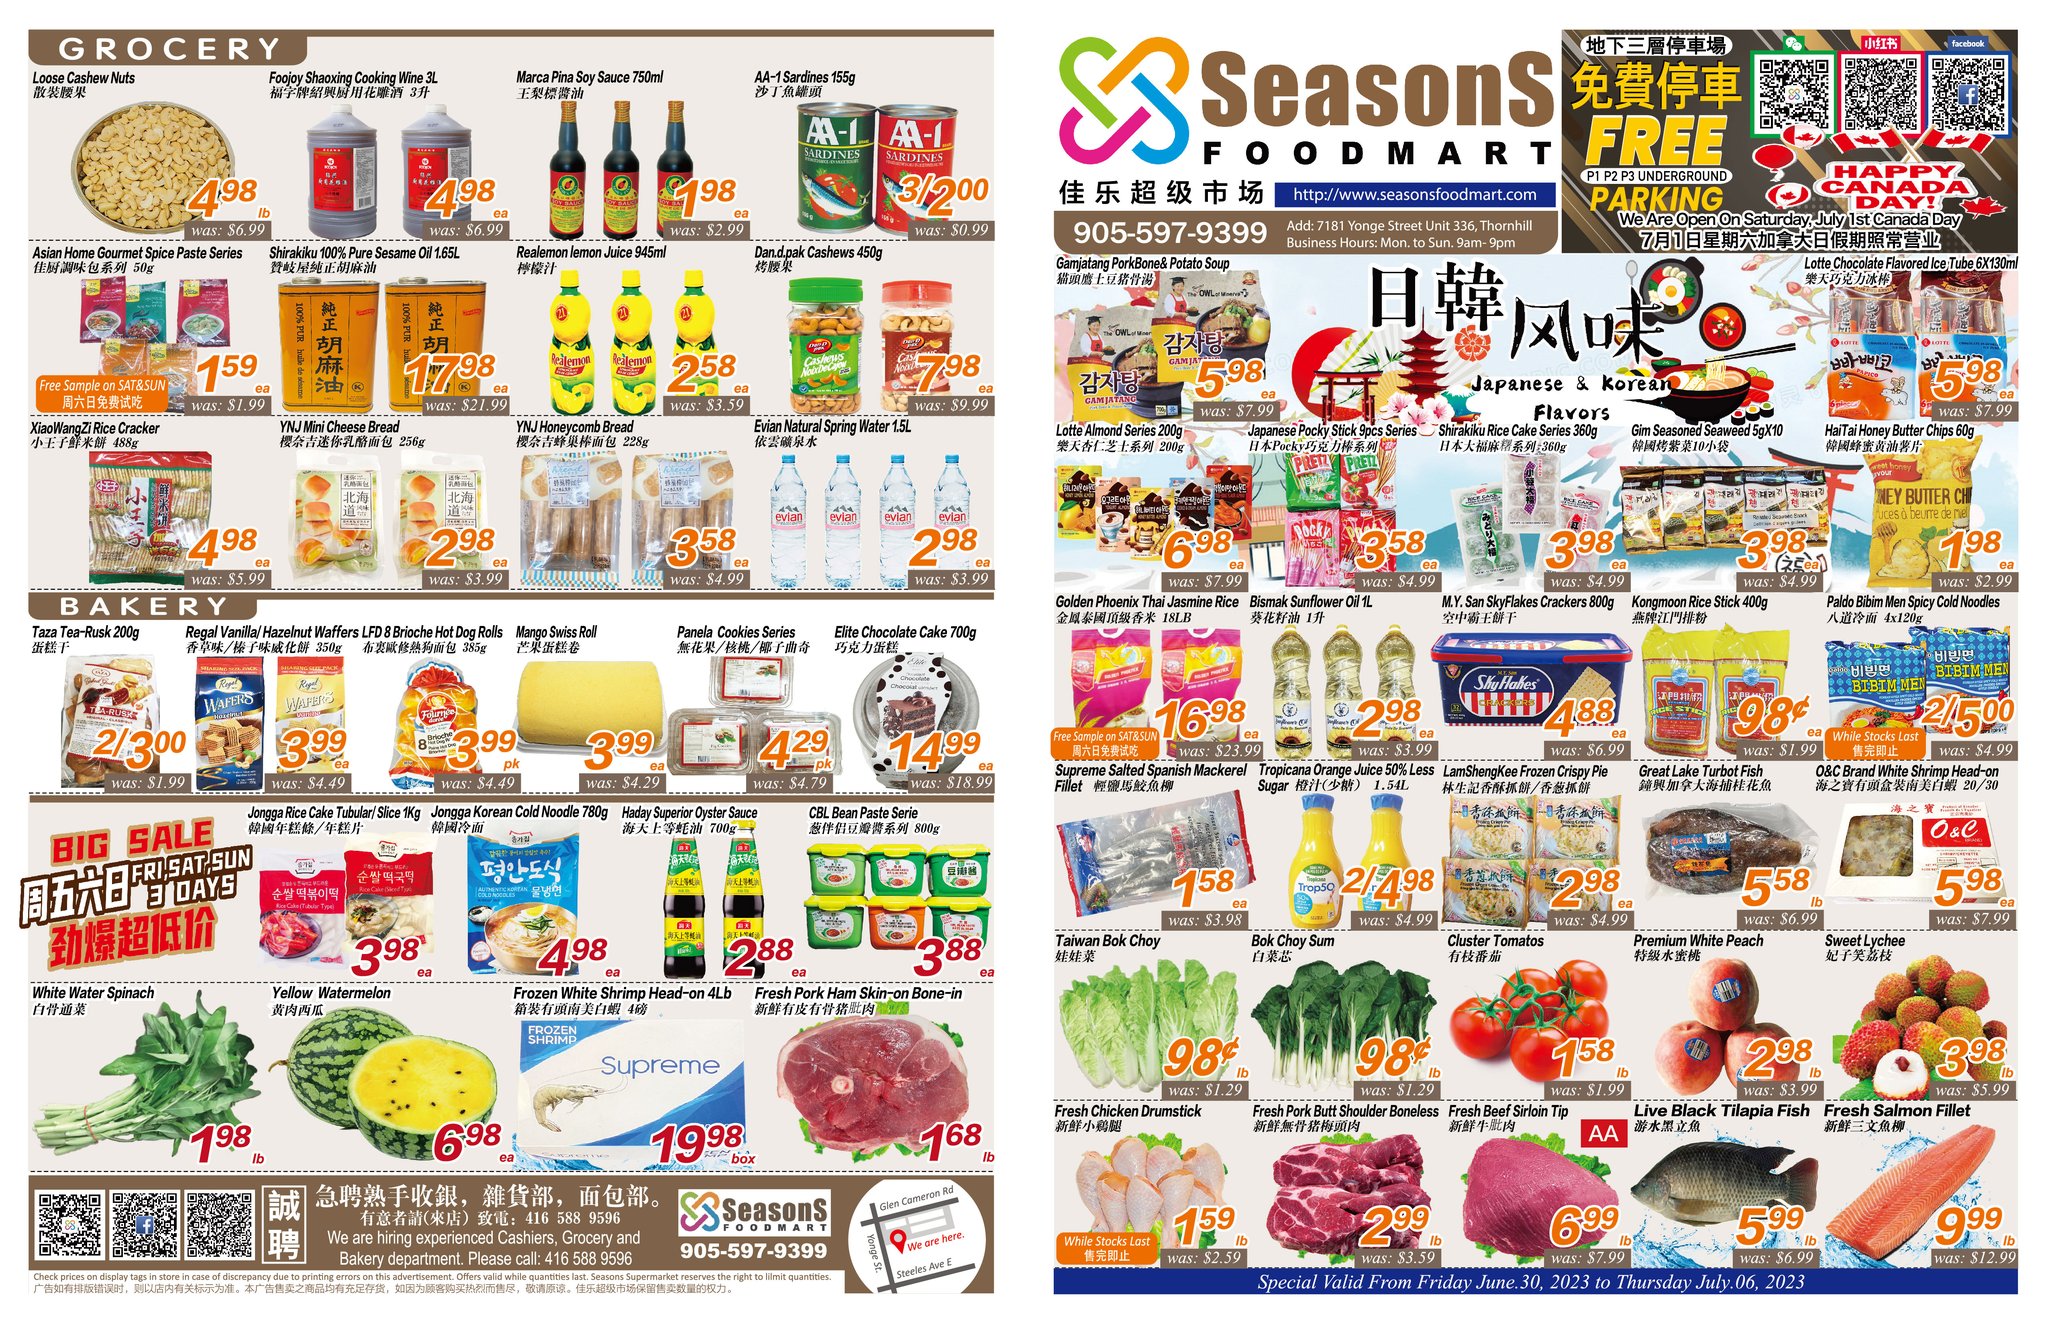 佳乐超市 Seasons Foodmart Flyer 2023年3月17日--3月23日 特价商品